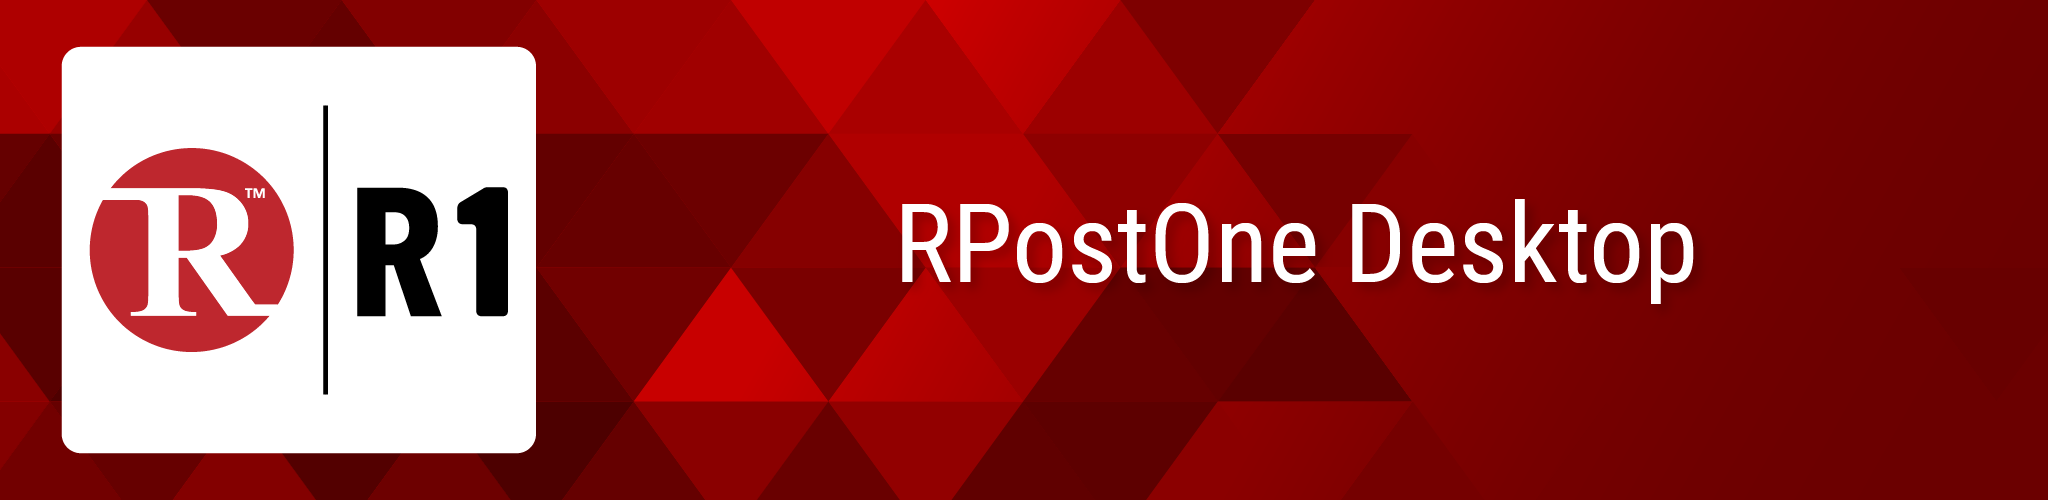 RPostOne Desktop: RSign, RMail and RDocs for Windows